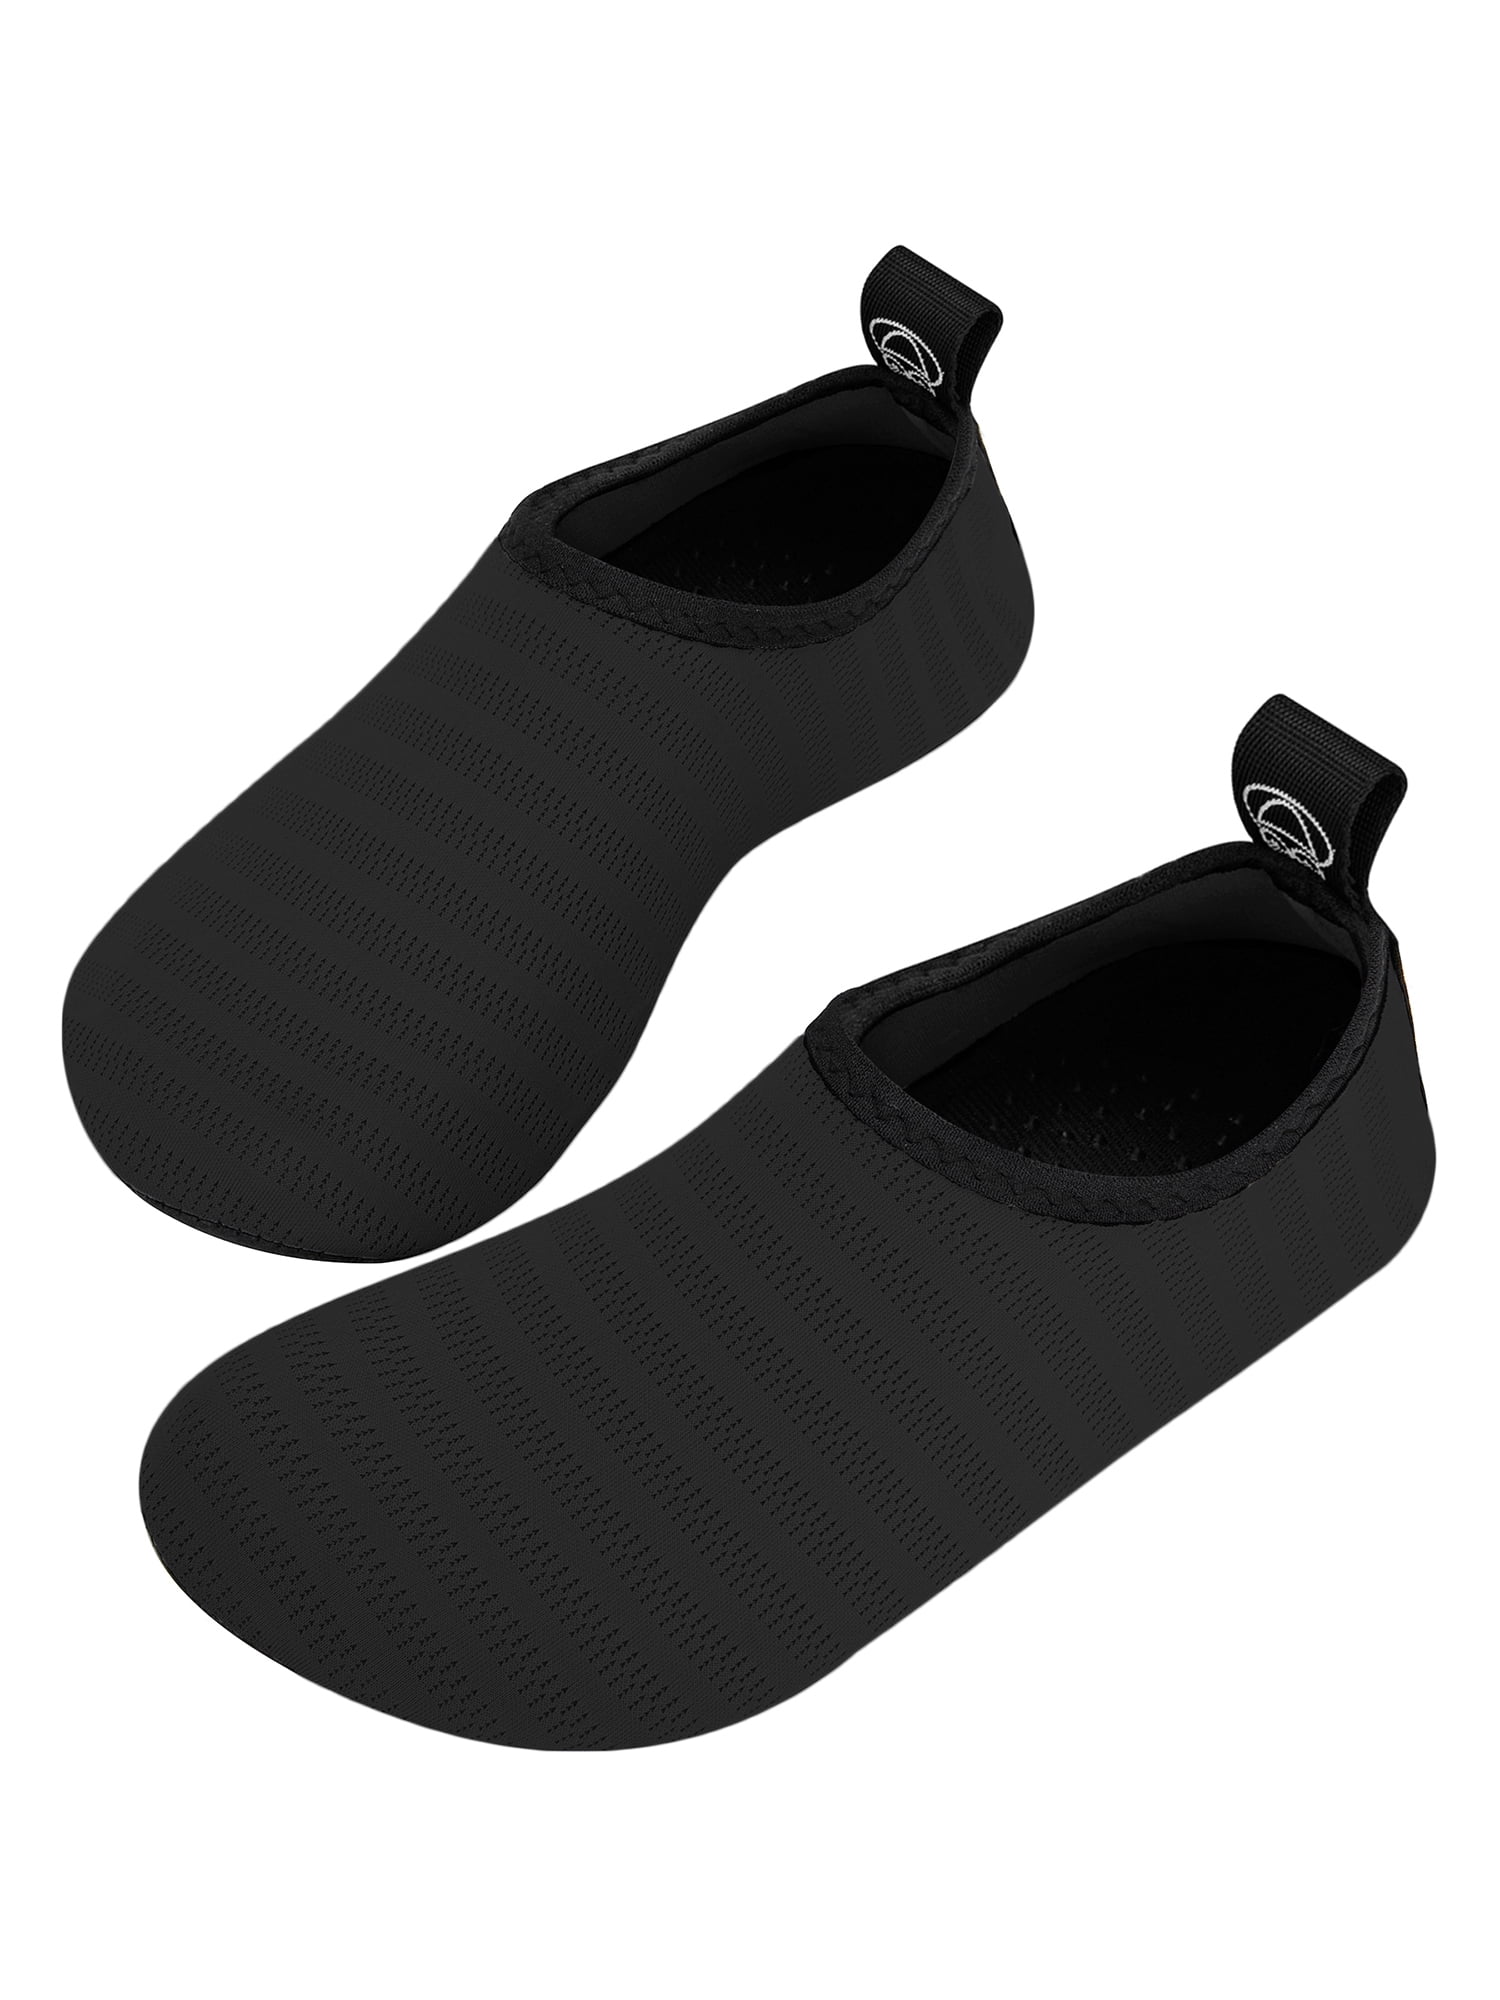 Mens Water Shoes Aqua Socks Slip On Flexible Pool Beach Swim Surf Zipper Yoga 